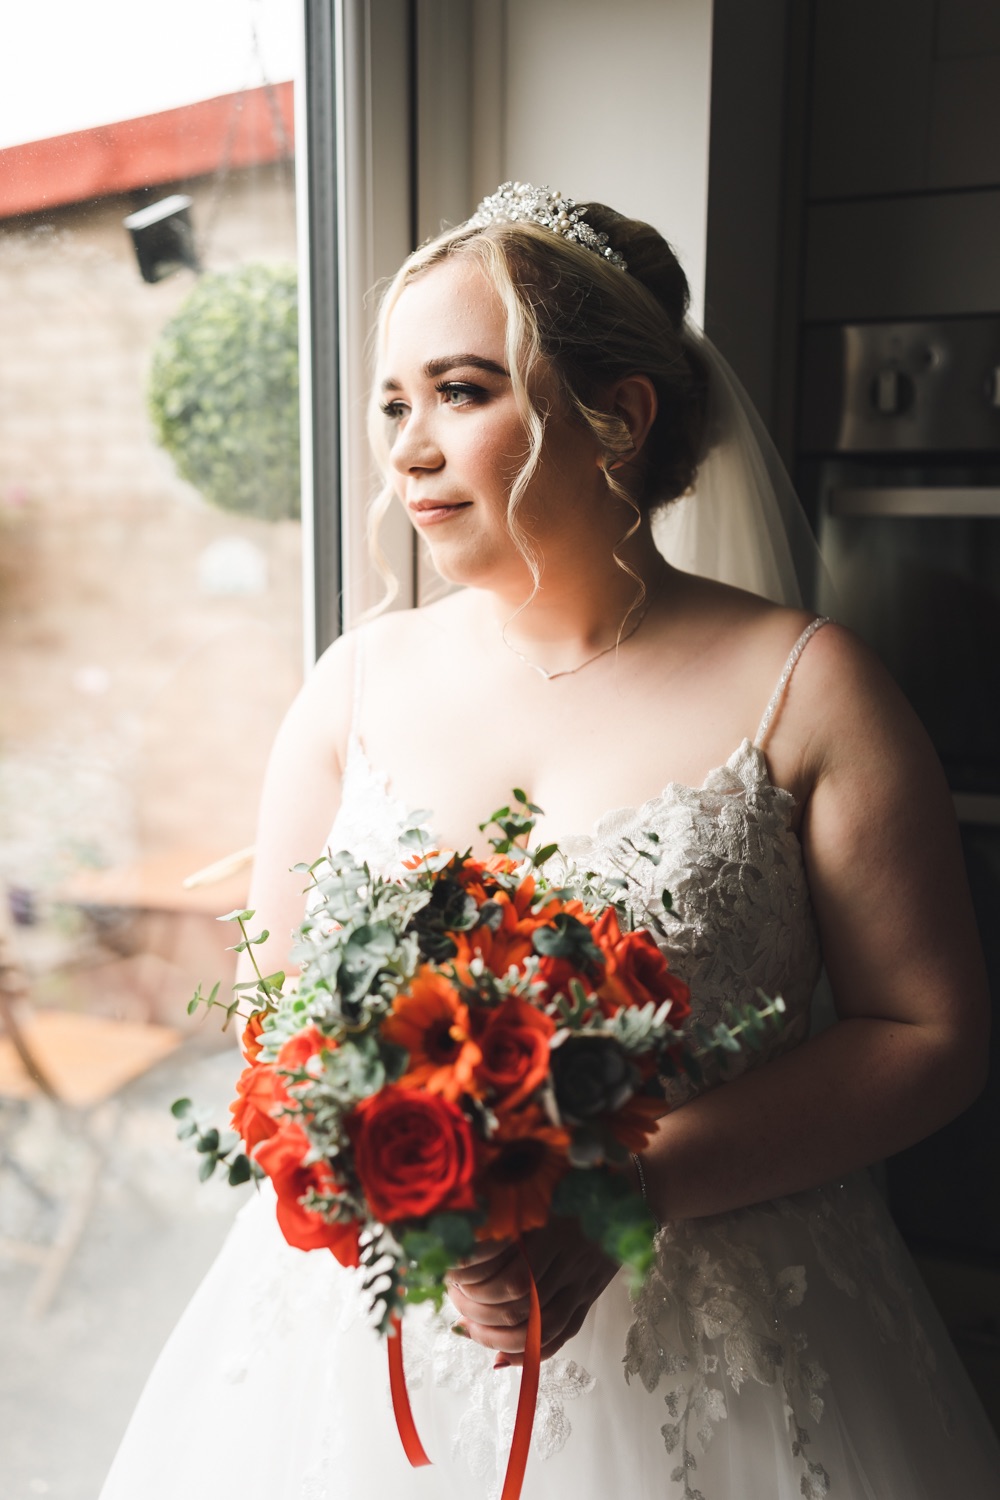 Spalding wedding photographer | BenChapmanPhotos | Lincolnshire wedding photographer